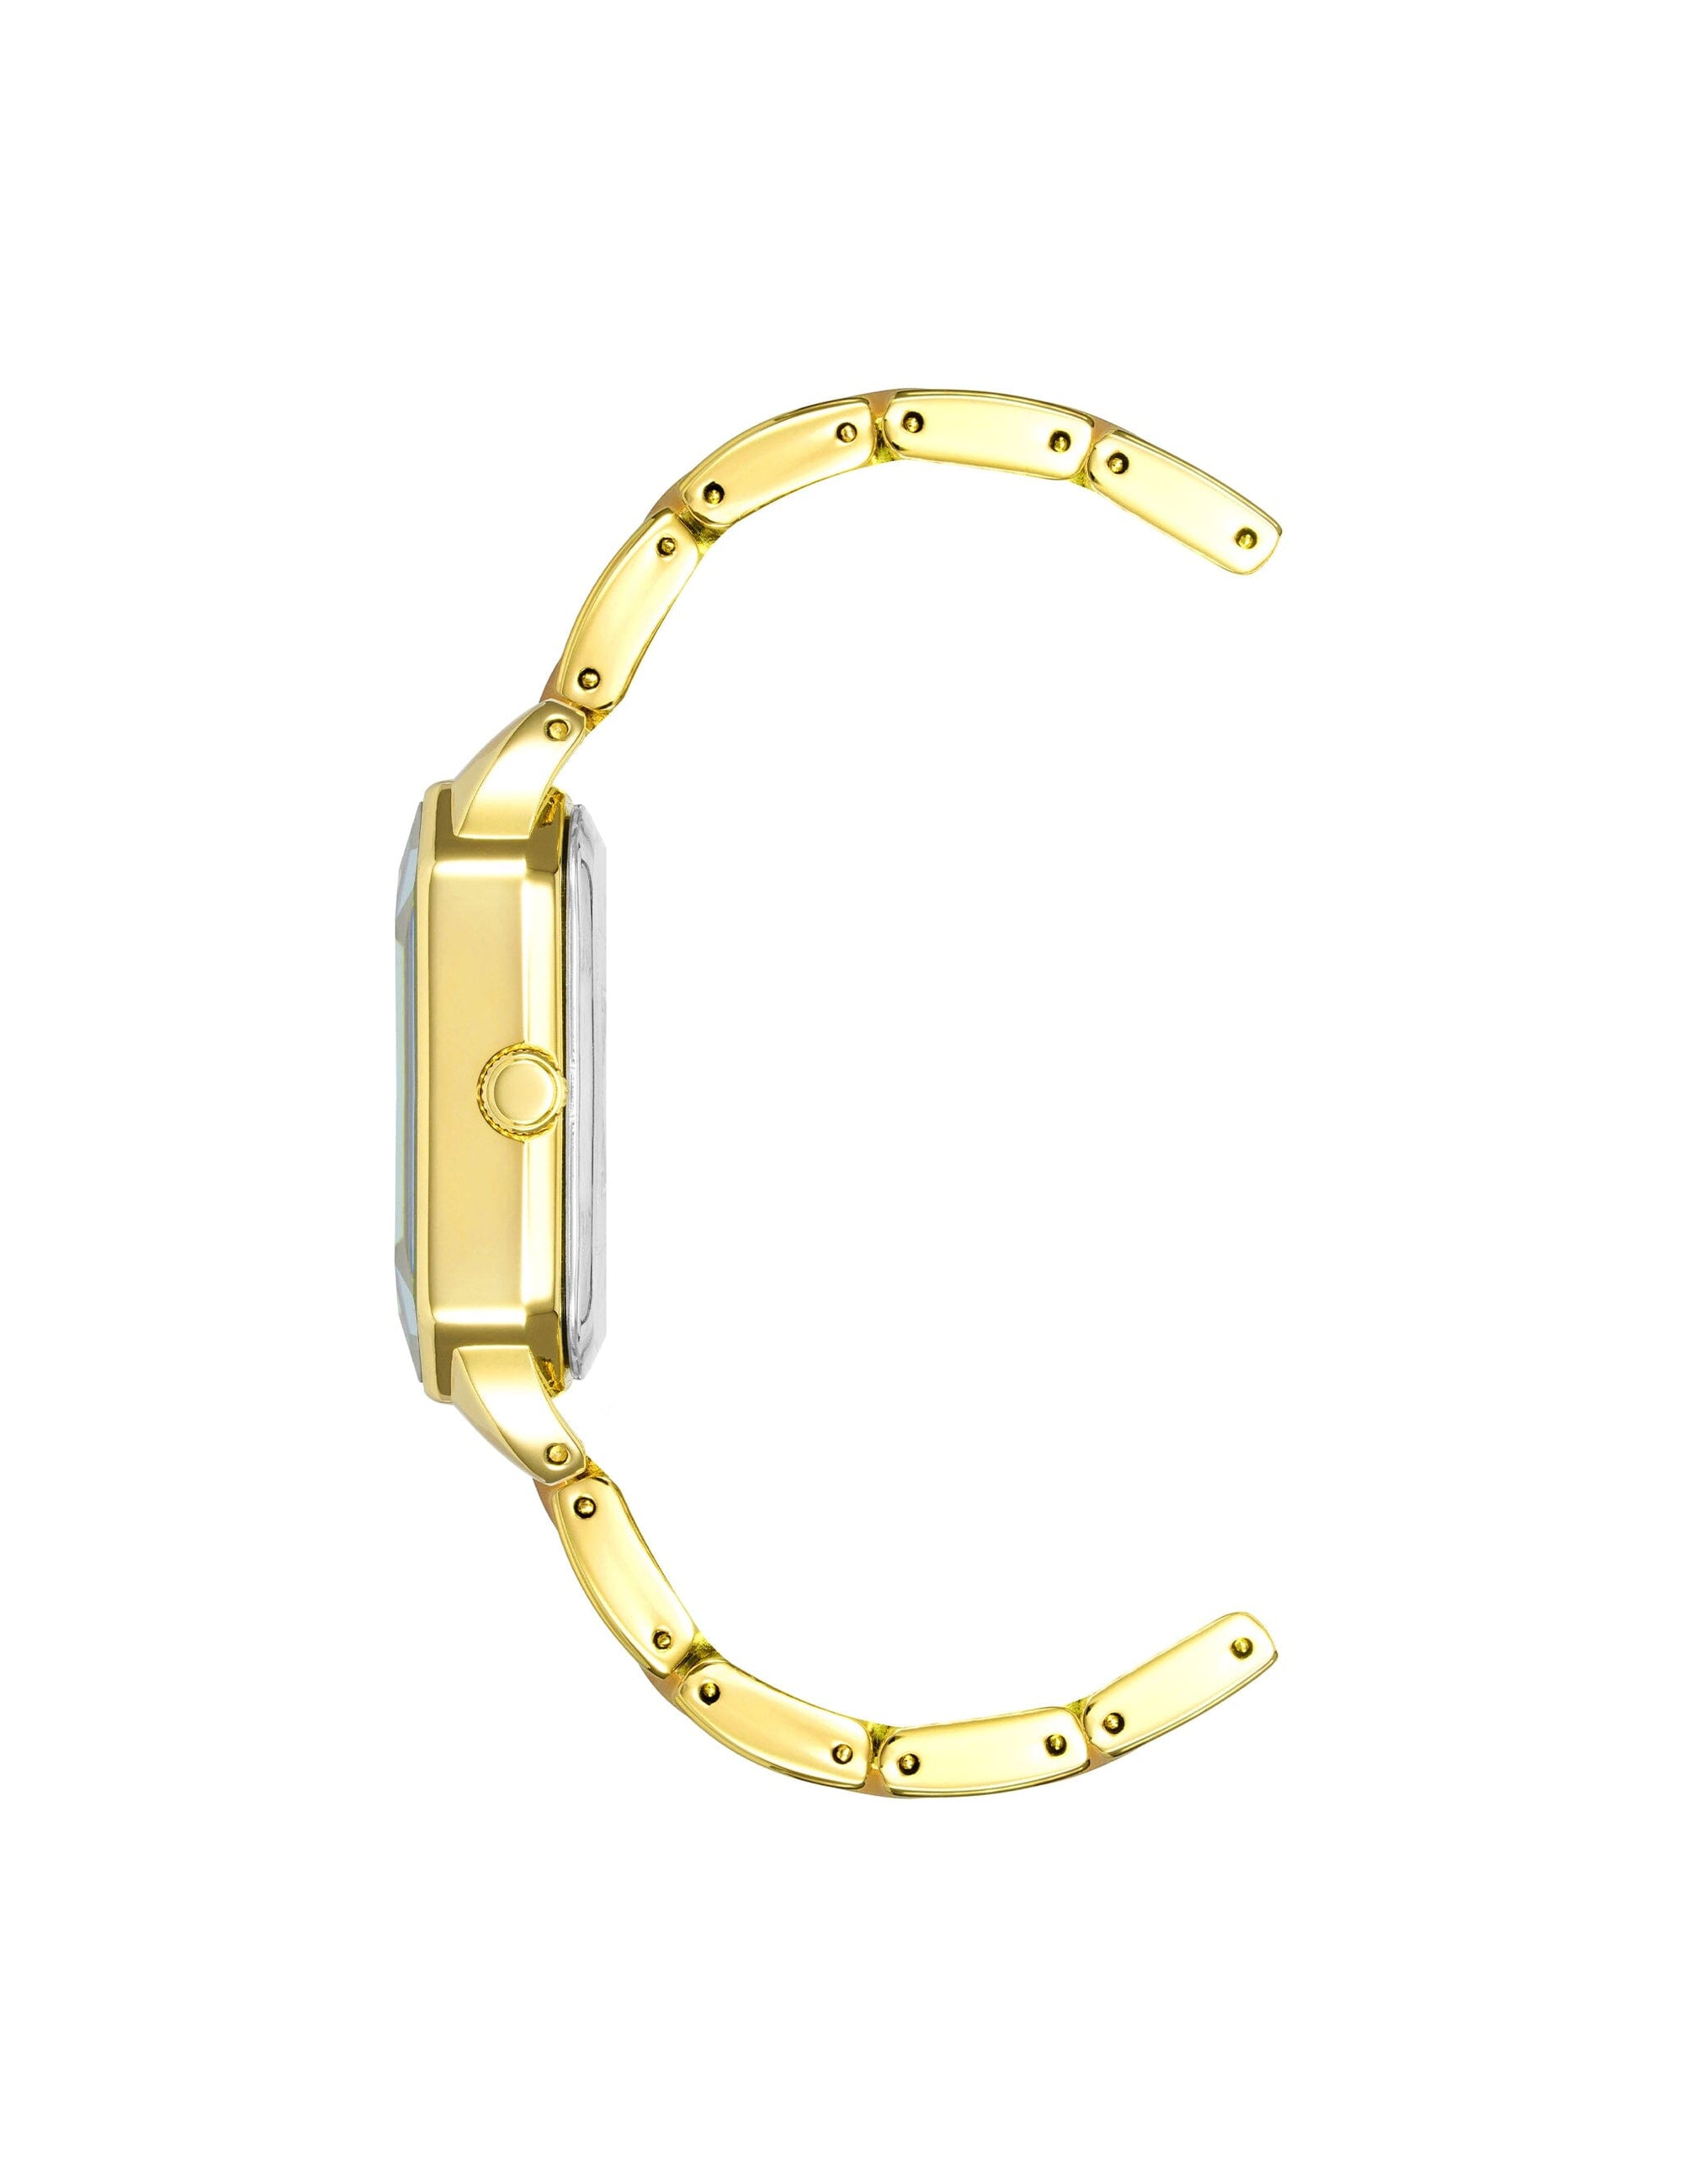 Anne Klein Brown/ Gold-Tone Square Case Resin Link Bracelet Watch